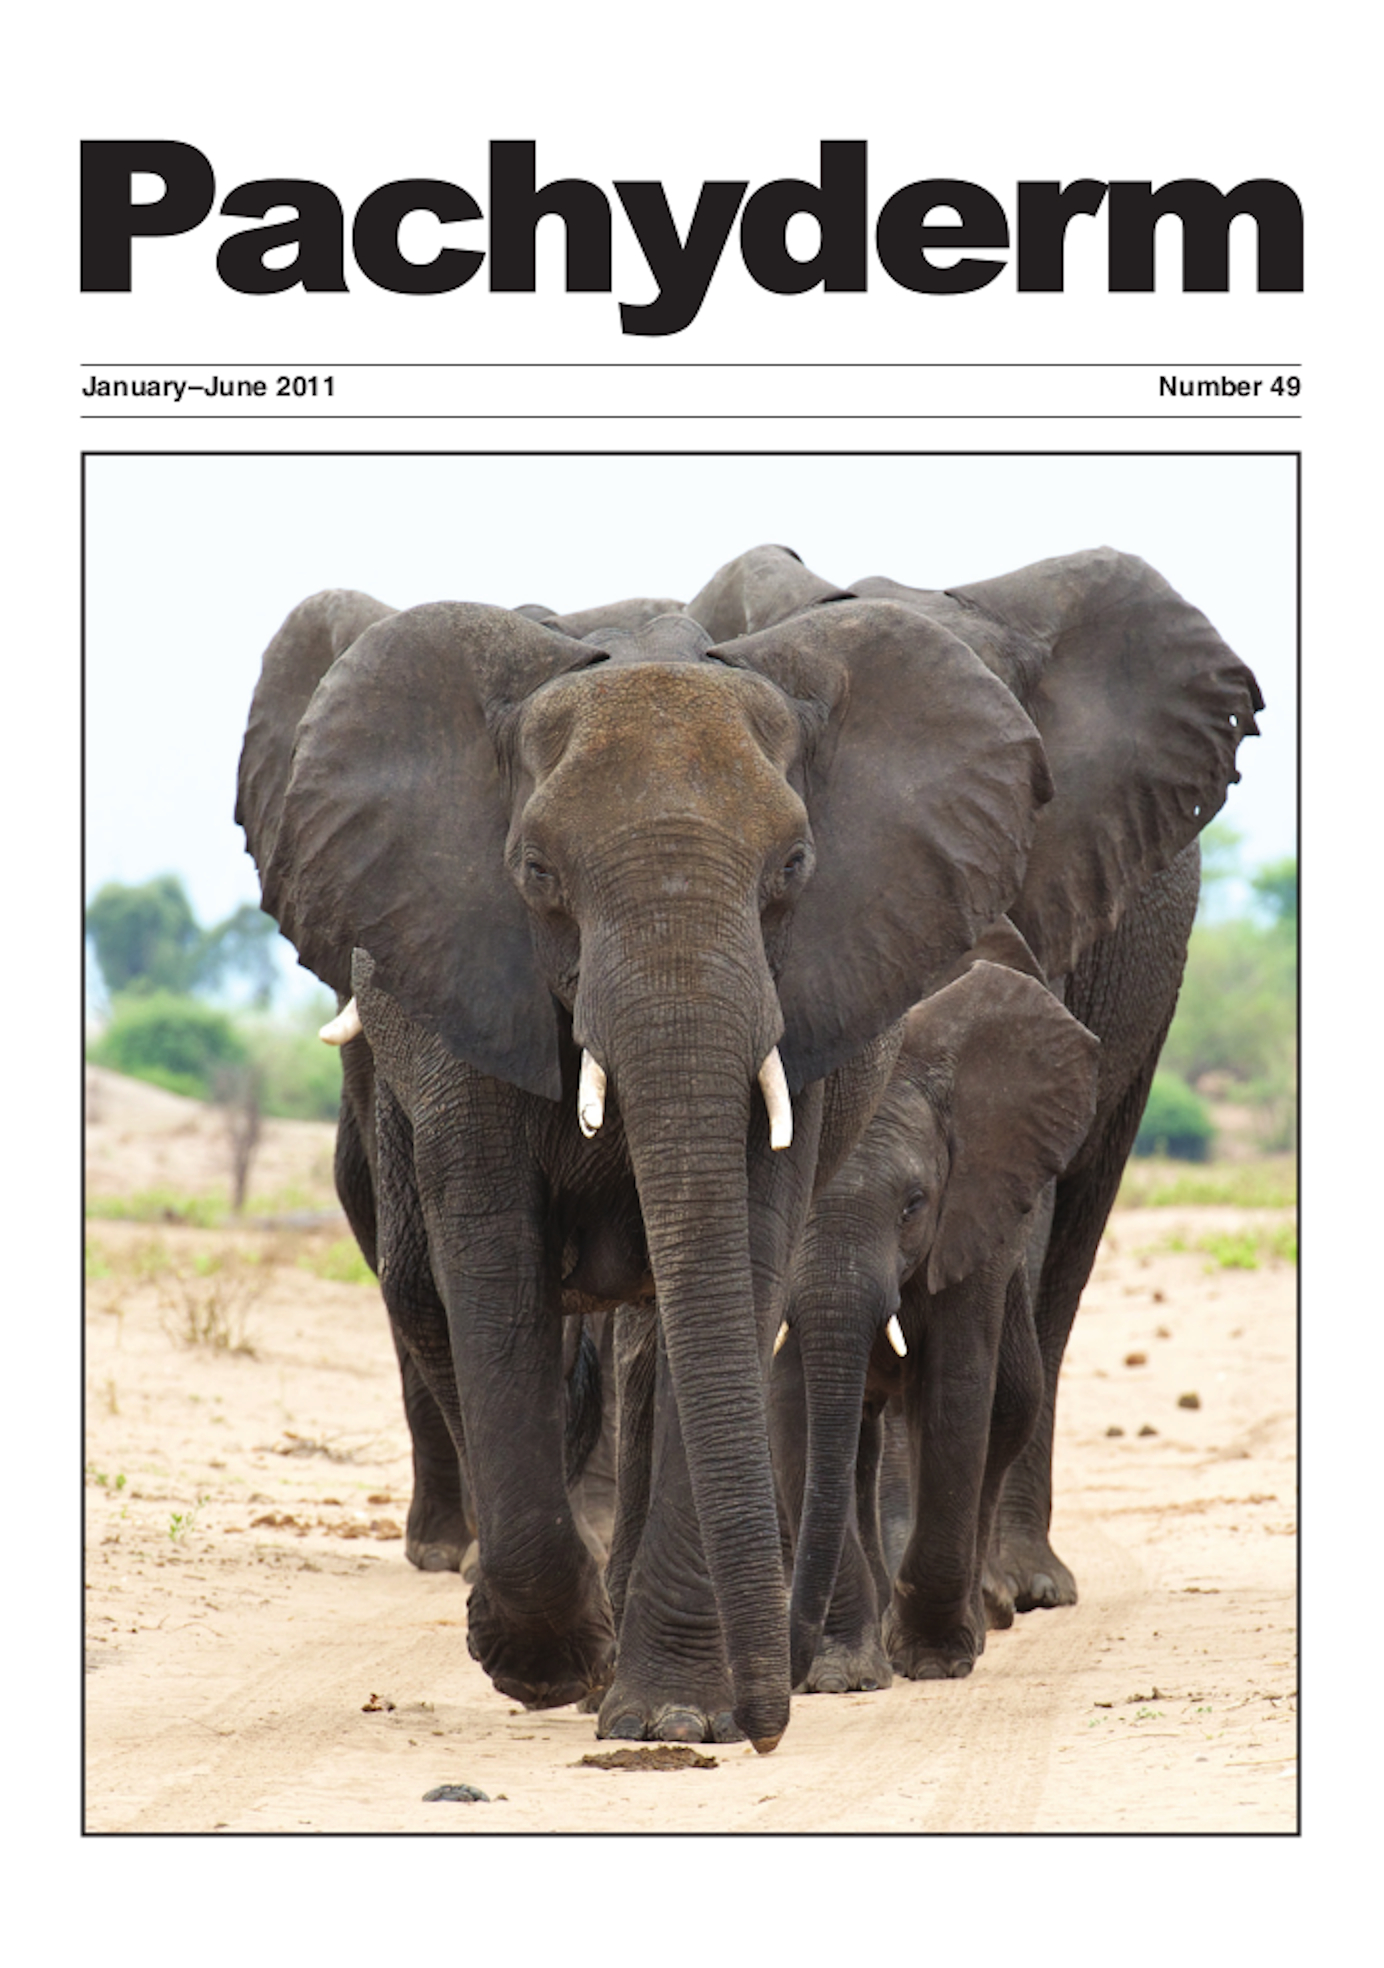 Cover: Elephants in Chobe National Park, Botswana. Photo: M.W. Atkinson